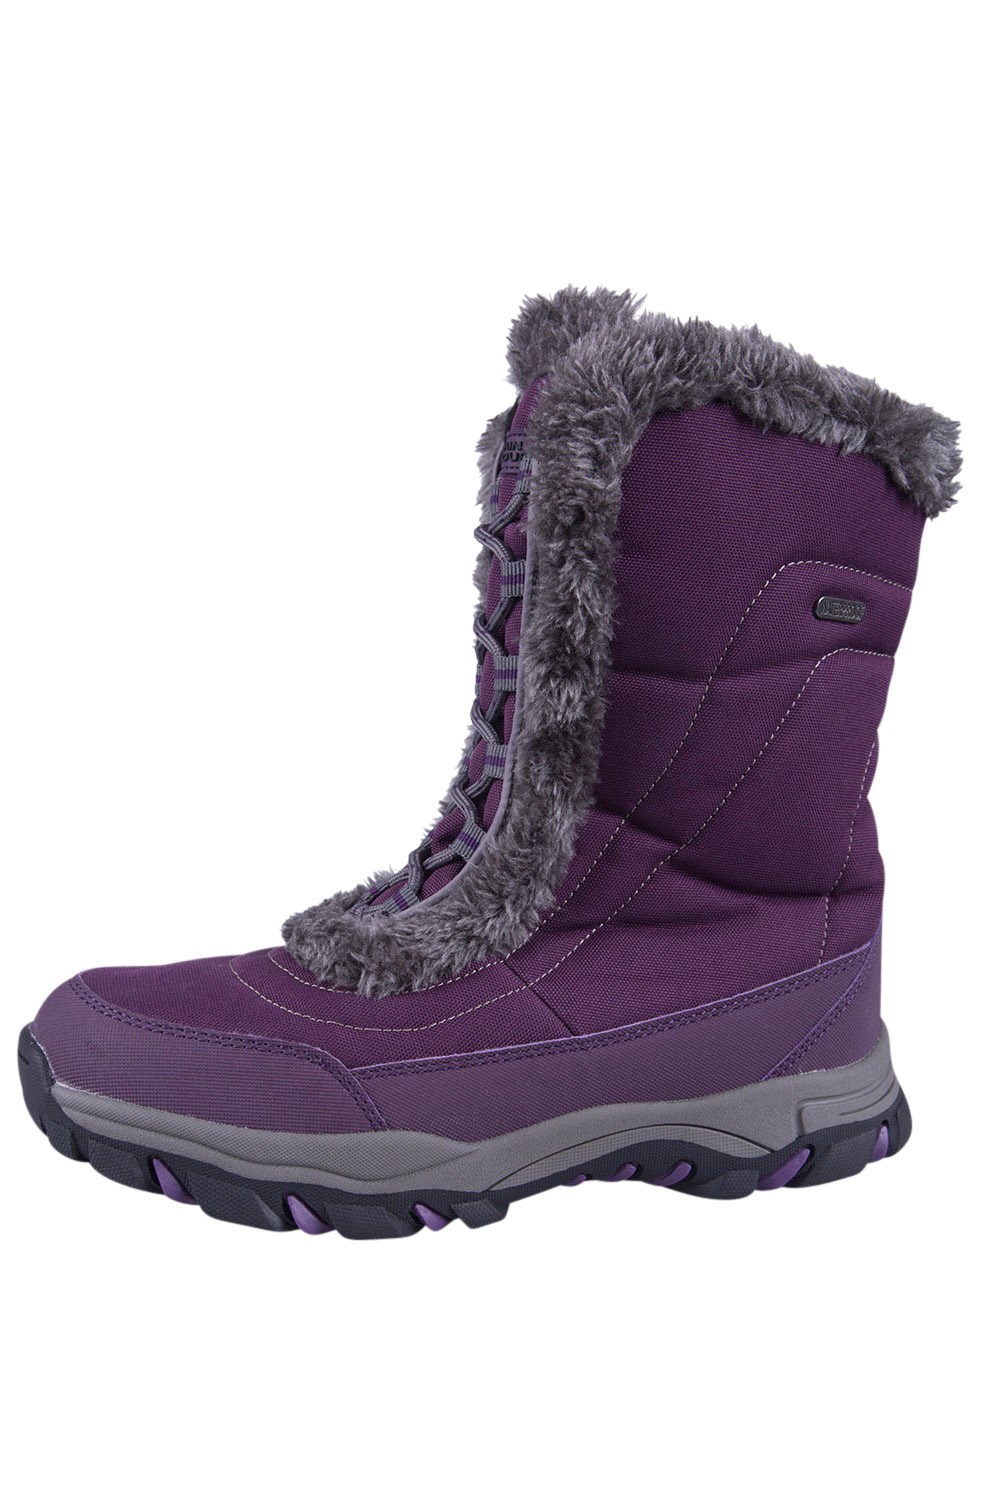 mountain warehouse ohio womens snow boots